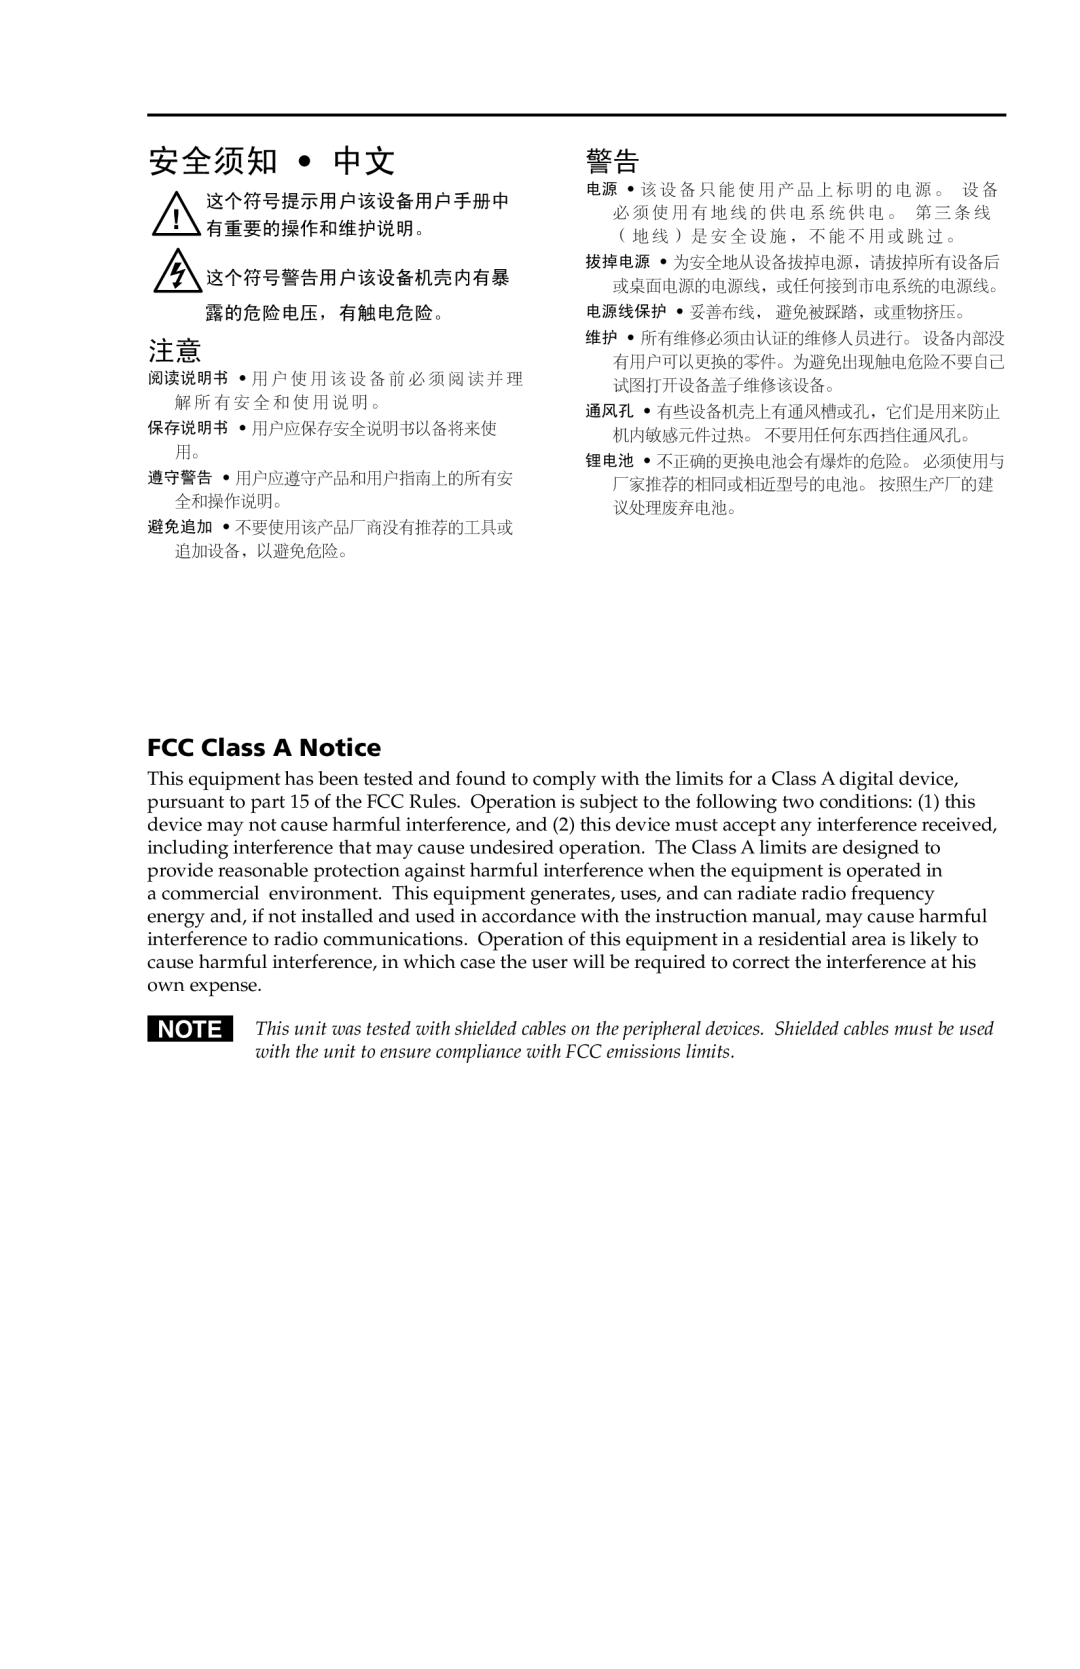 Extron electronic SW6 user manual 安全须知 中文, FCC Class A Notice 